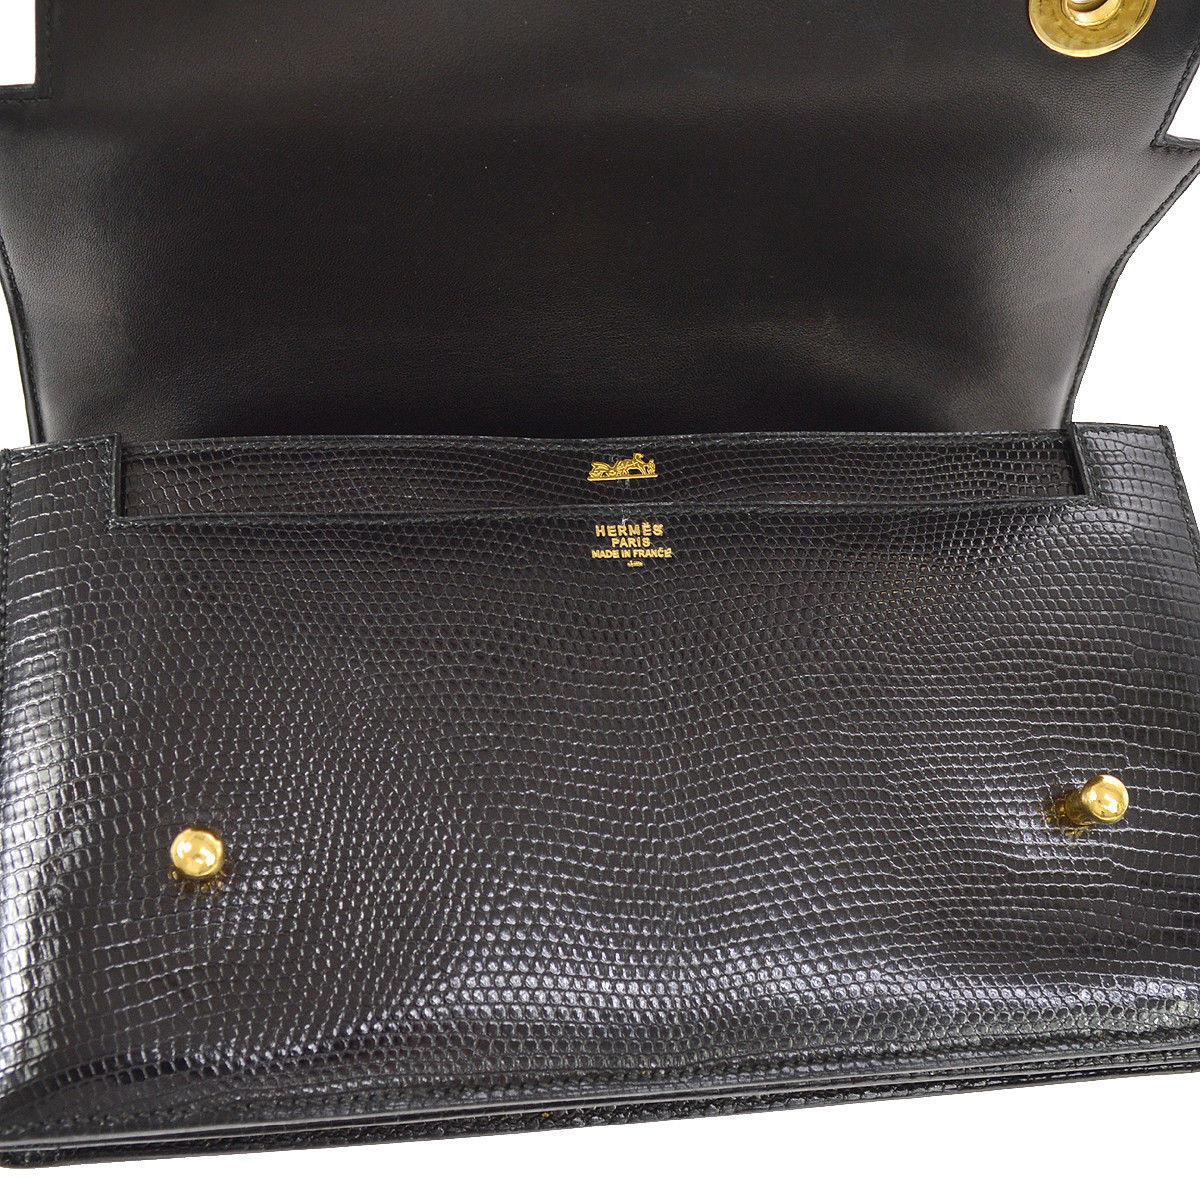 Hermes Black Lizard Leather Evening Gold Stud Top Handle Satchel Kelly Style Bag 2